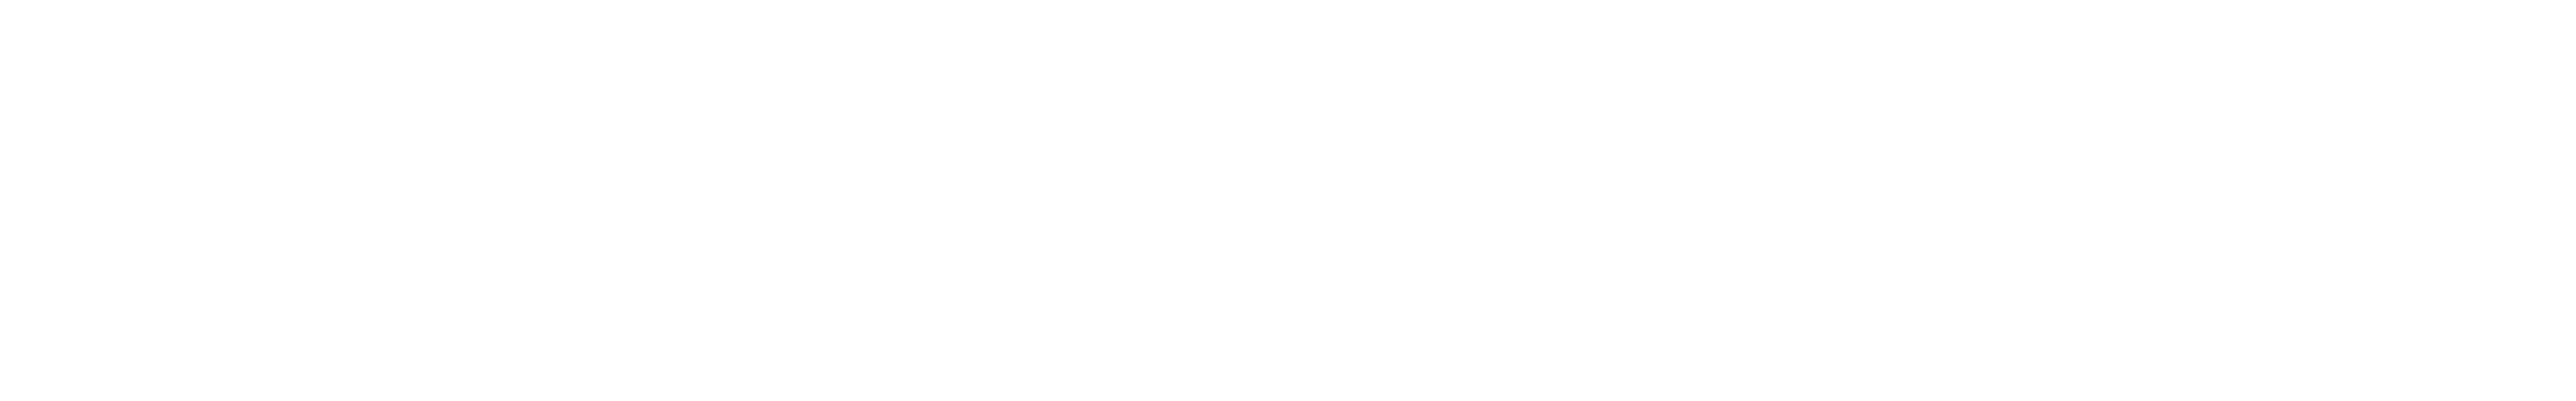 Pakistan Journal of Women’s Studies: Alam-e-Niswan